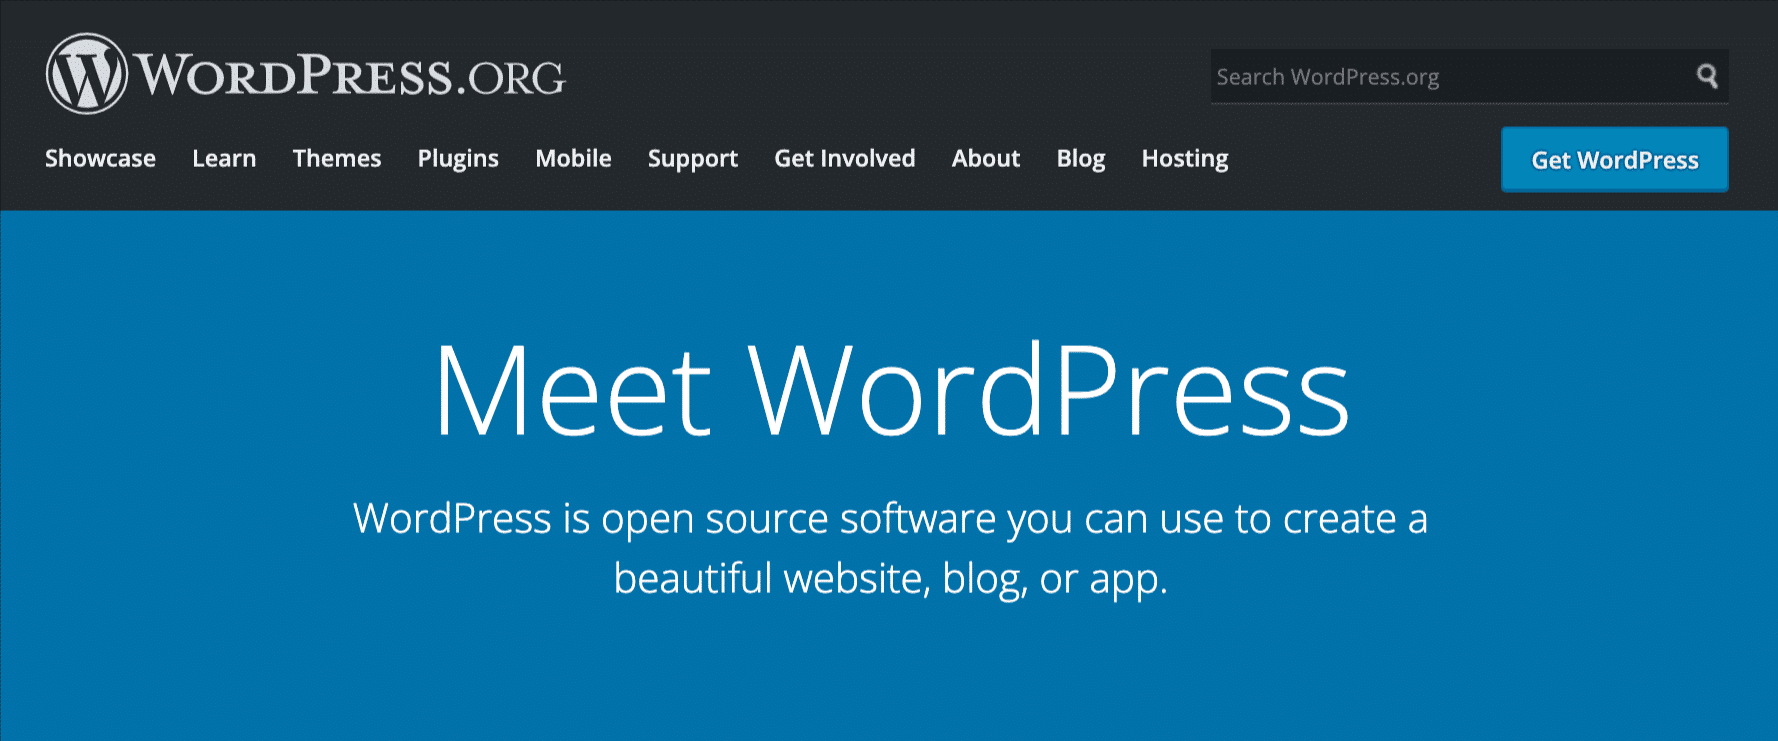 WordPress.org 主页的屏幕截图，蓝色背景上有白色文字，上面写着 